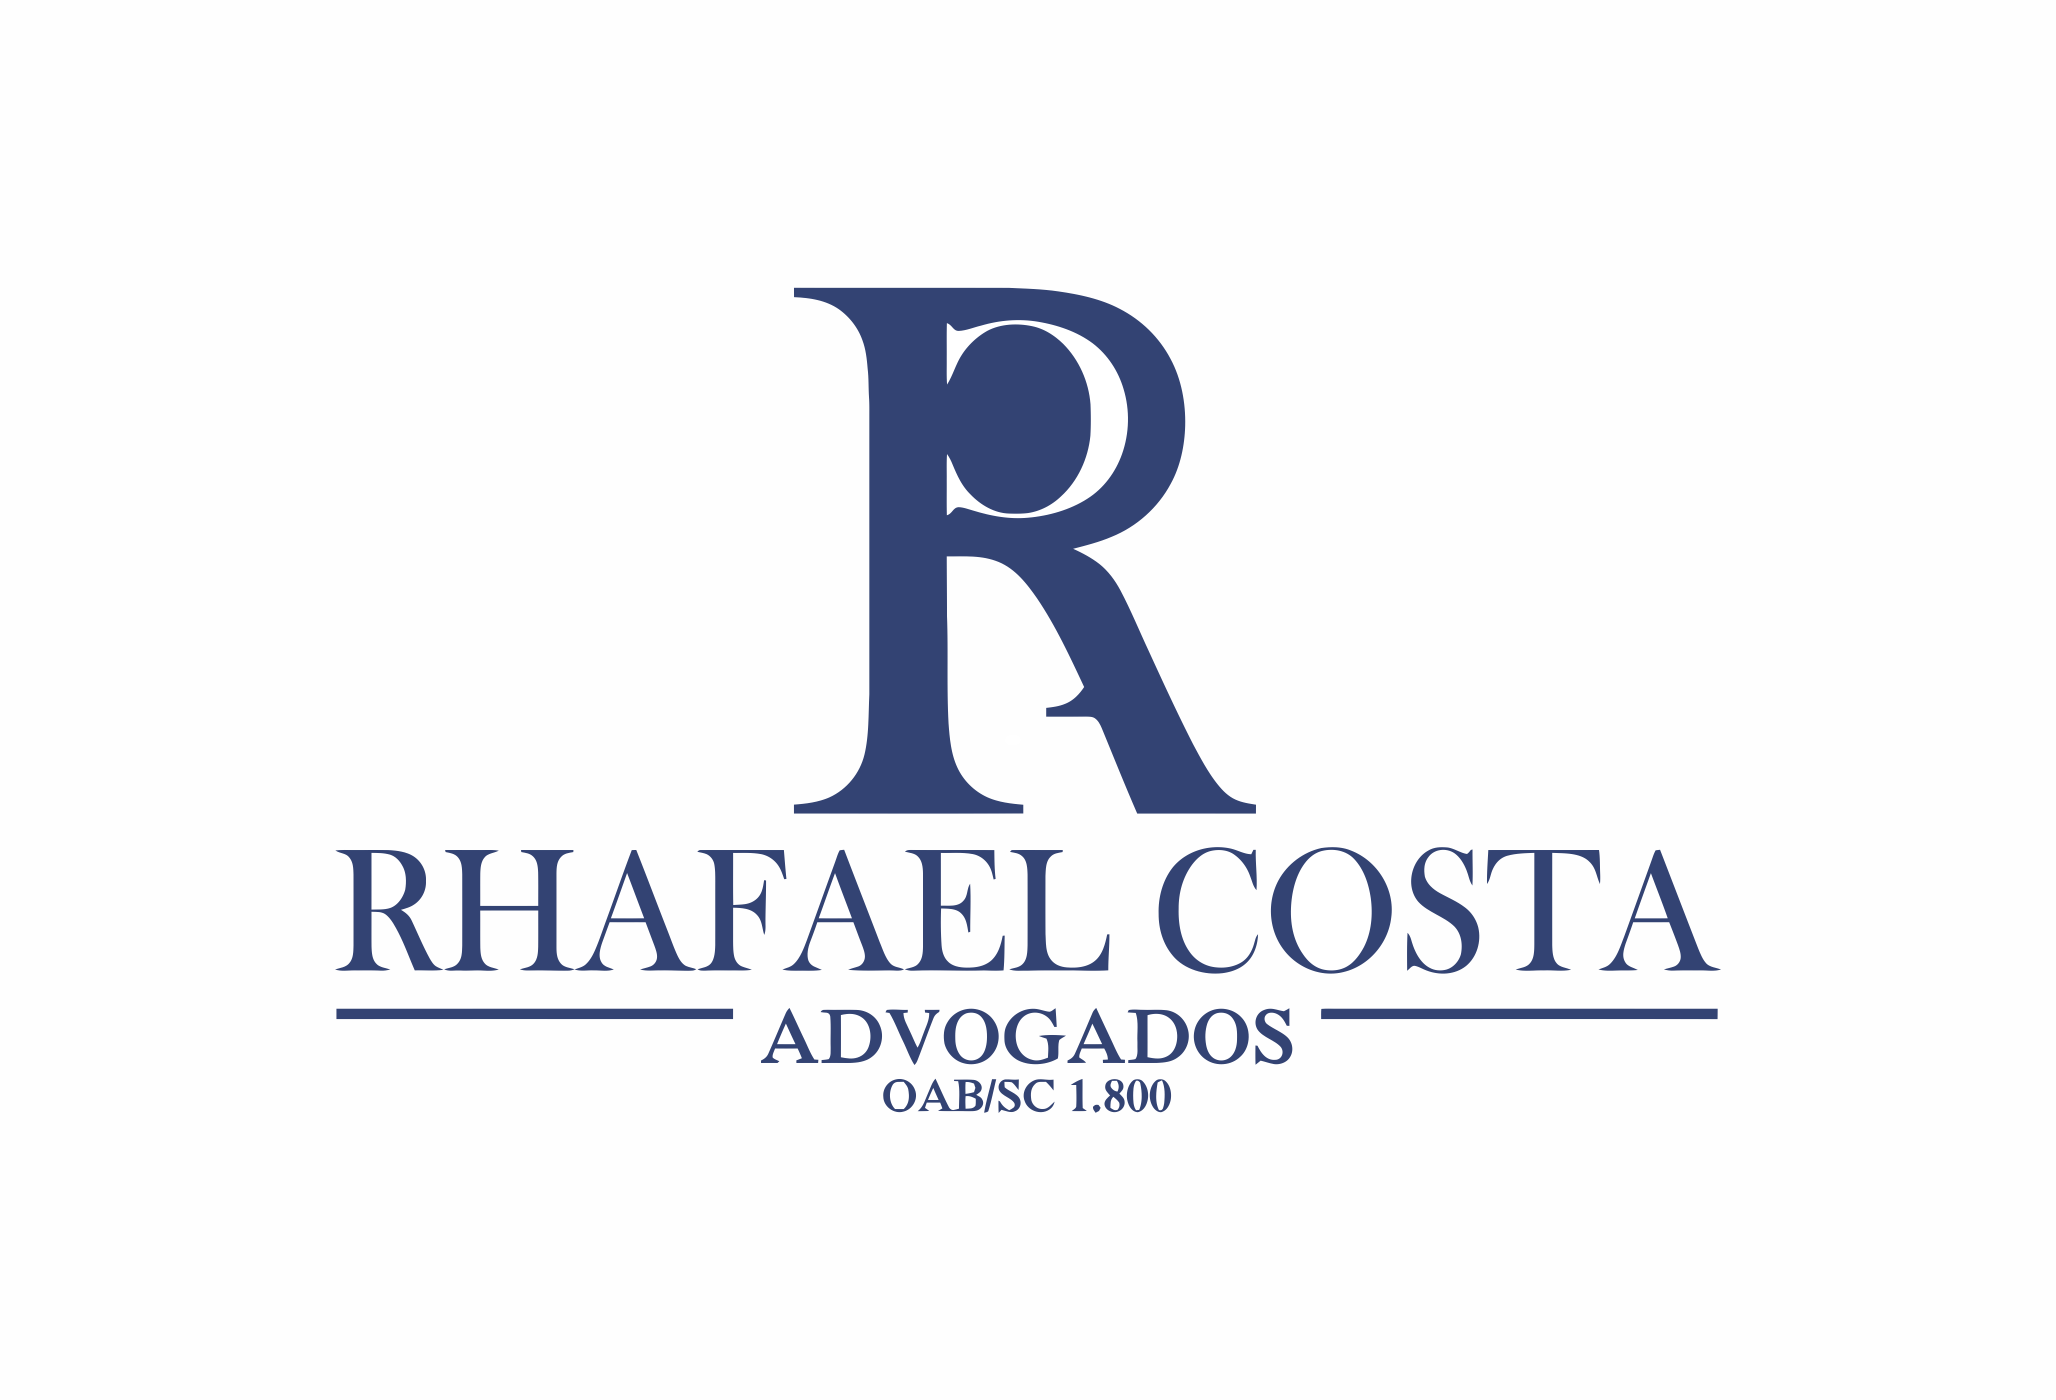 Rhafael Costa Advogados